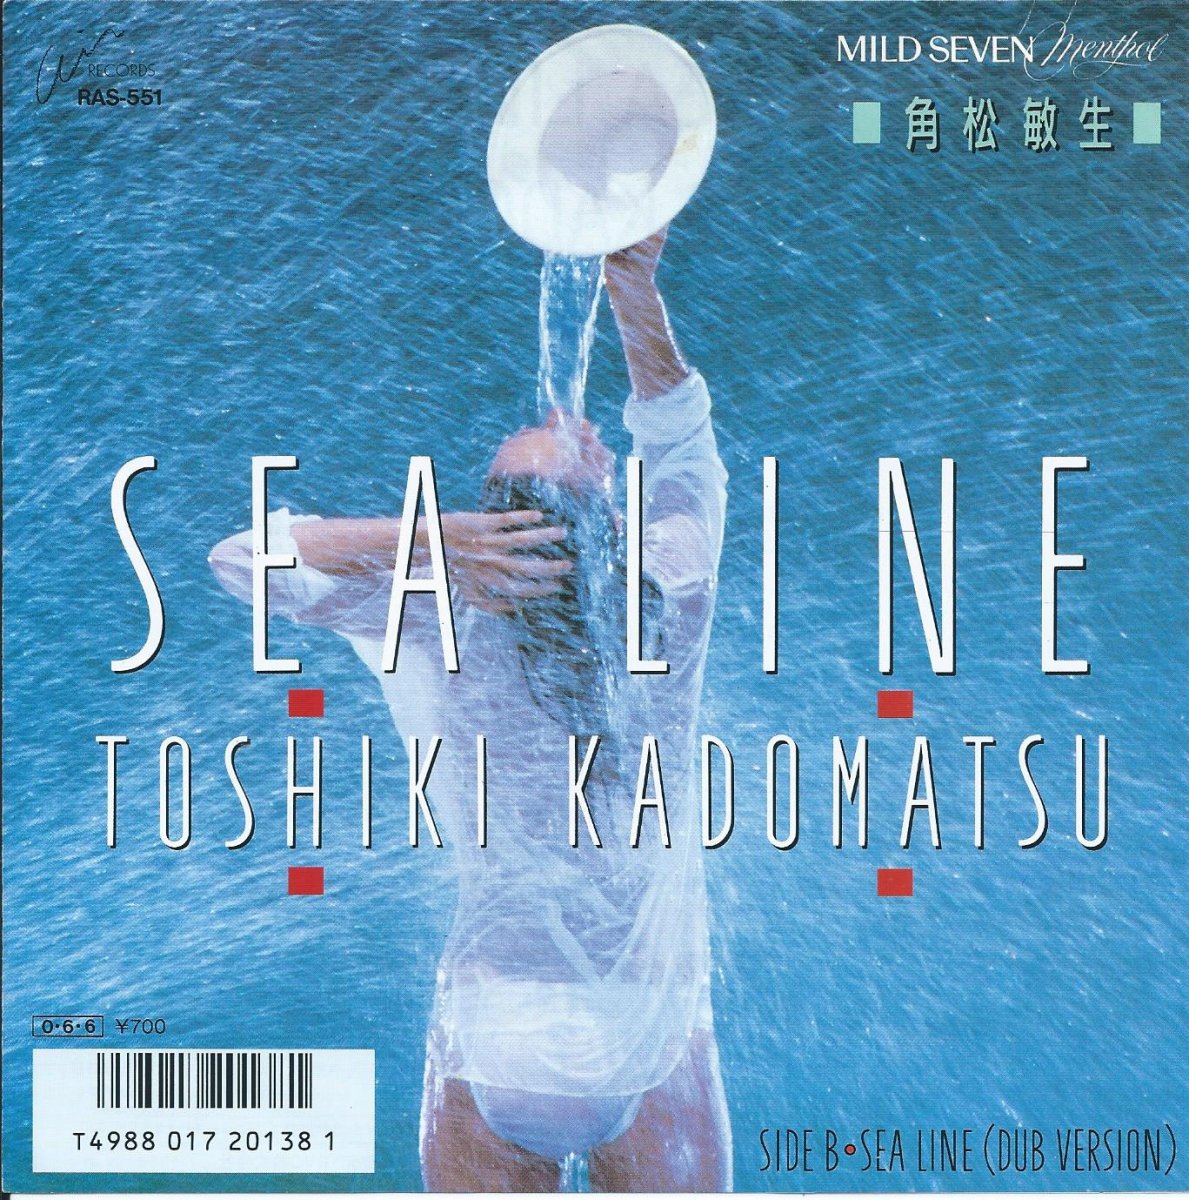 角松敏生 TOSHIKI KADOMATSU / SEA LINE / (DUB VERSION) (7